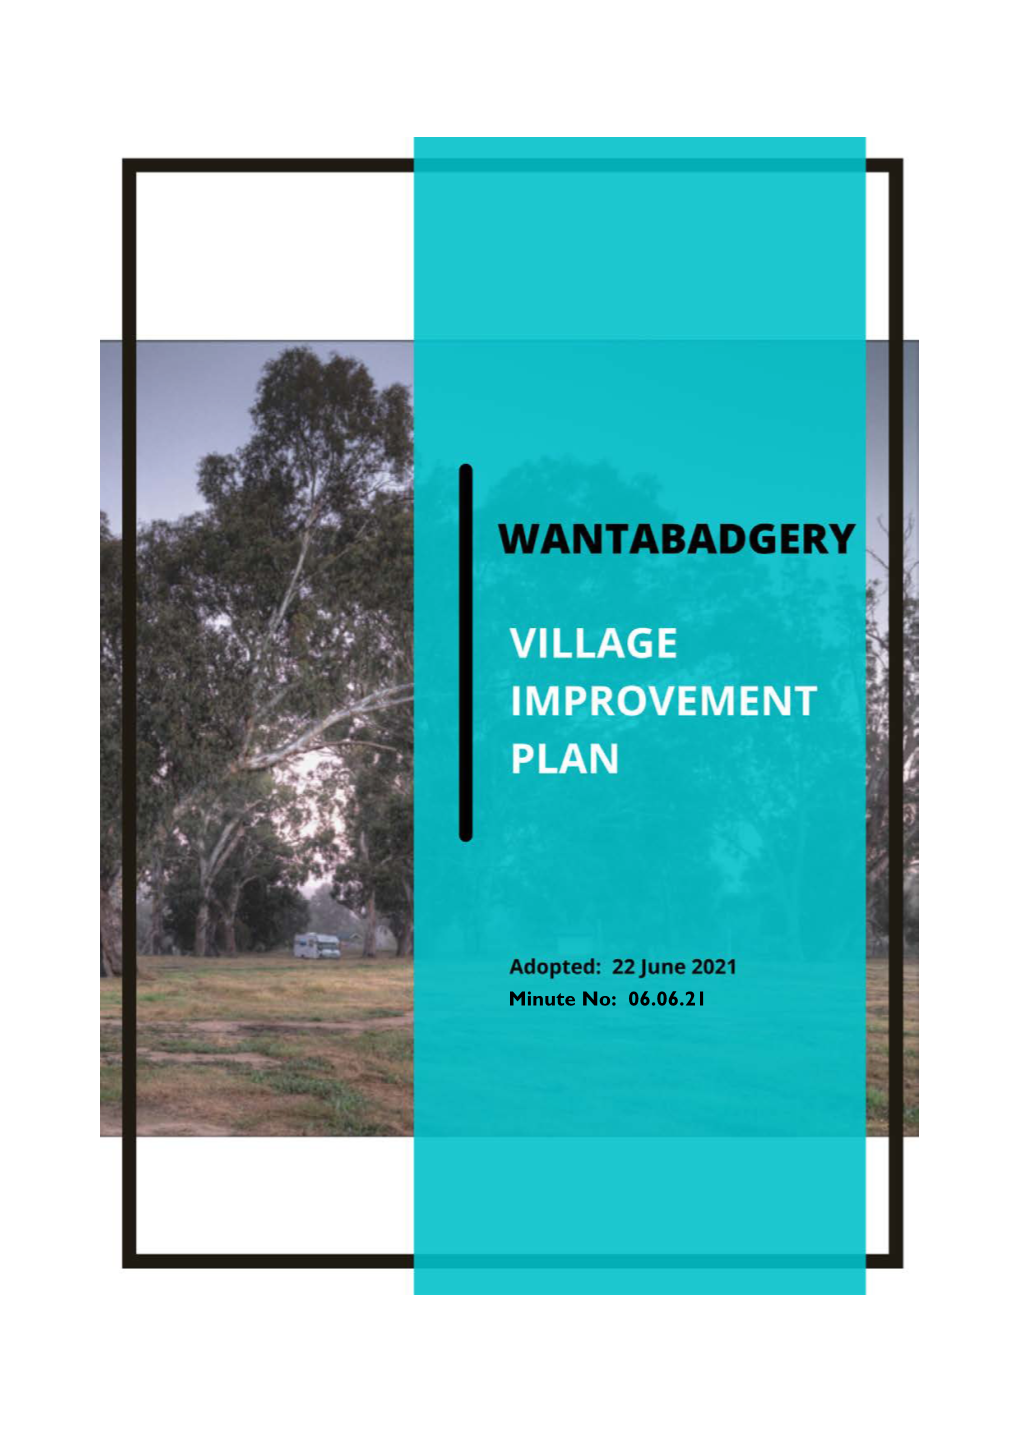 Wantabadgery Village Plan Adopted 22 June 2021